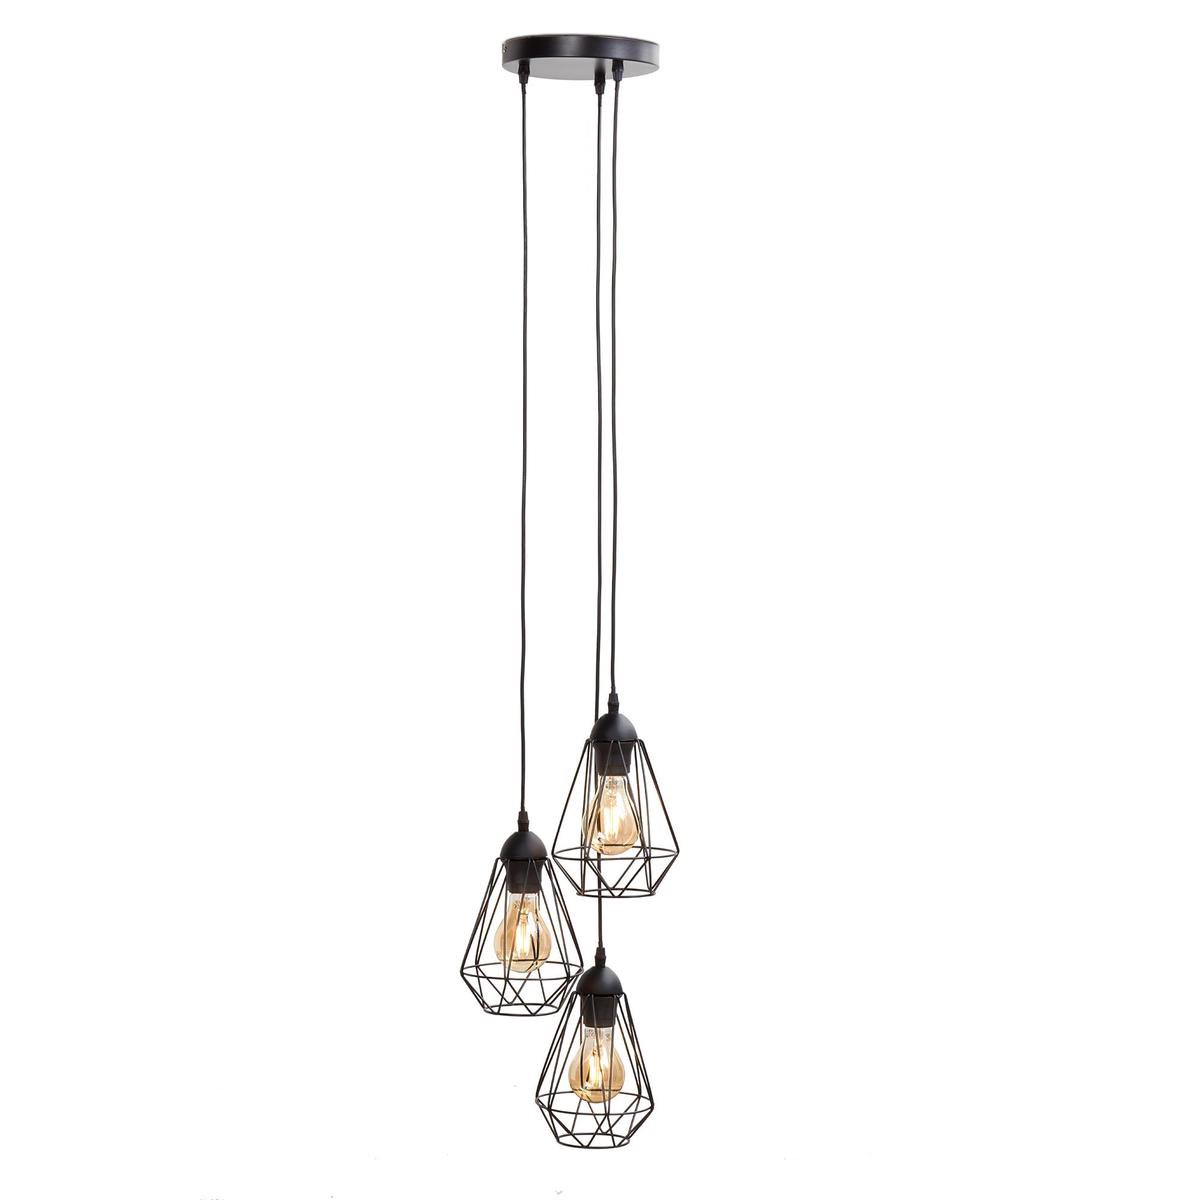 B.K.Licht - Metalen Hanglampen - zwart - voor binnen - industriële - met 3 lichtpunten - eetkamer - pendellamp - Ø29cm - l:135cm - E27 fitting - excl. lichtbronnen - B.K.Licht